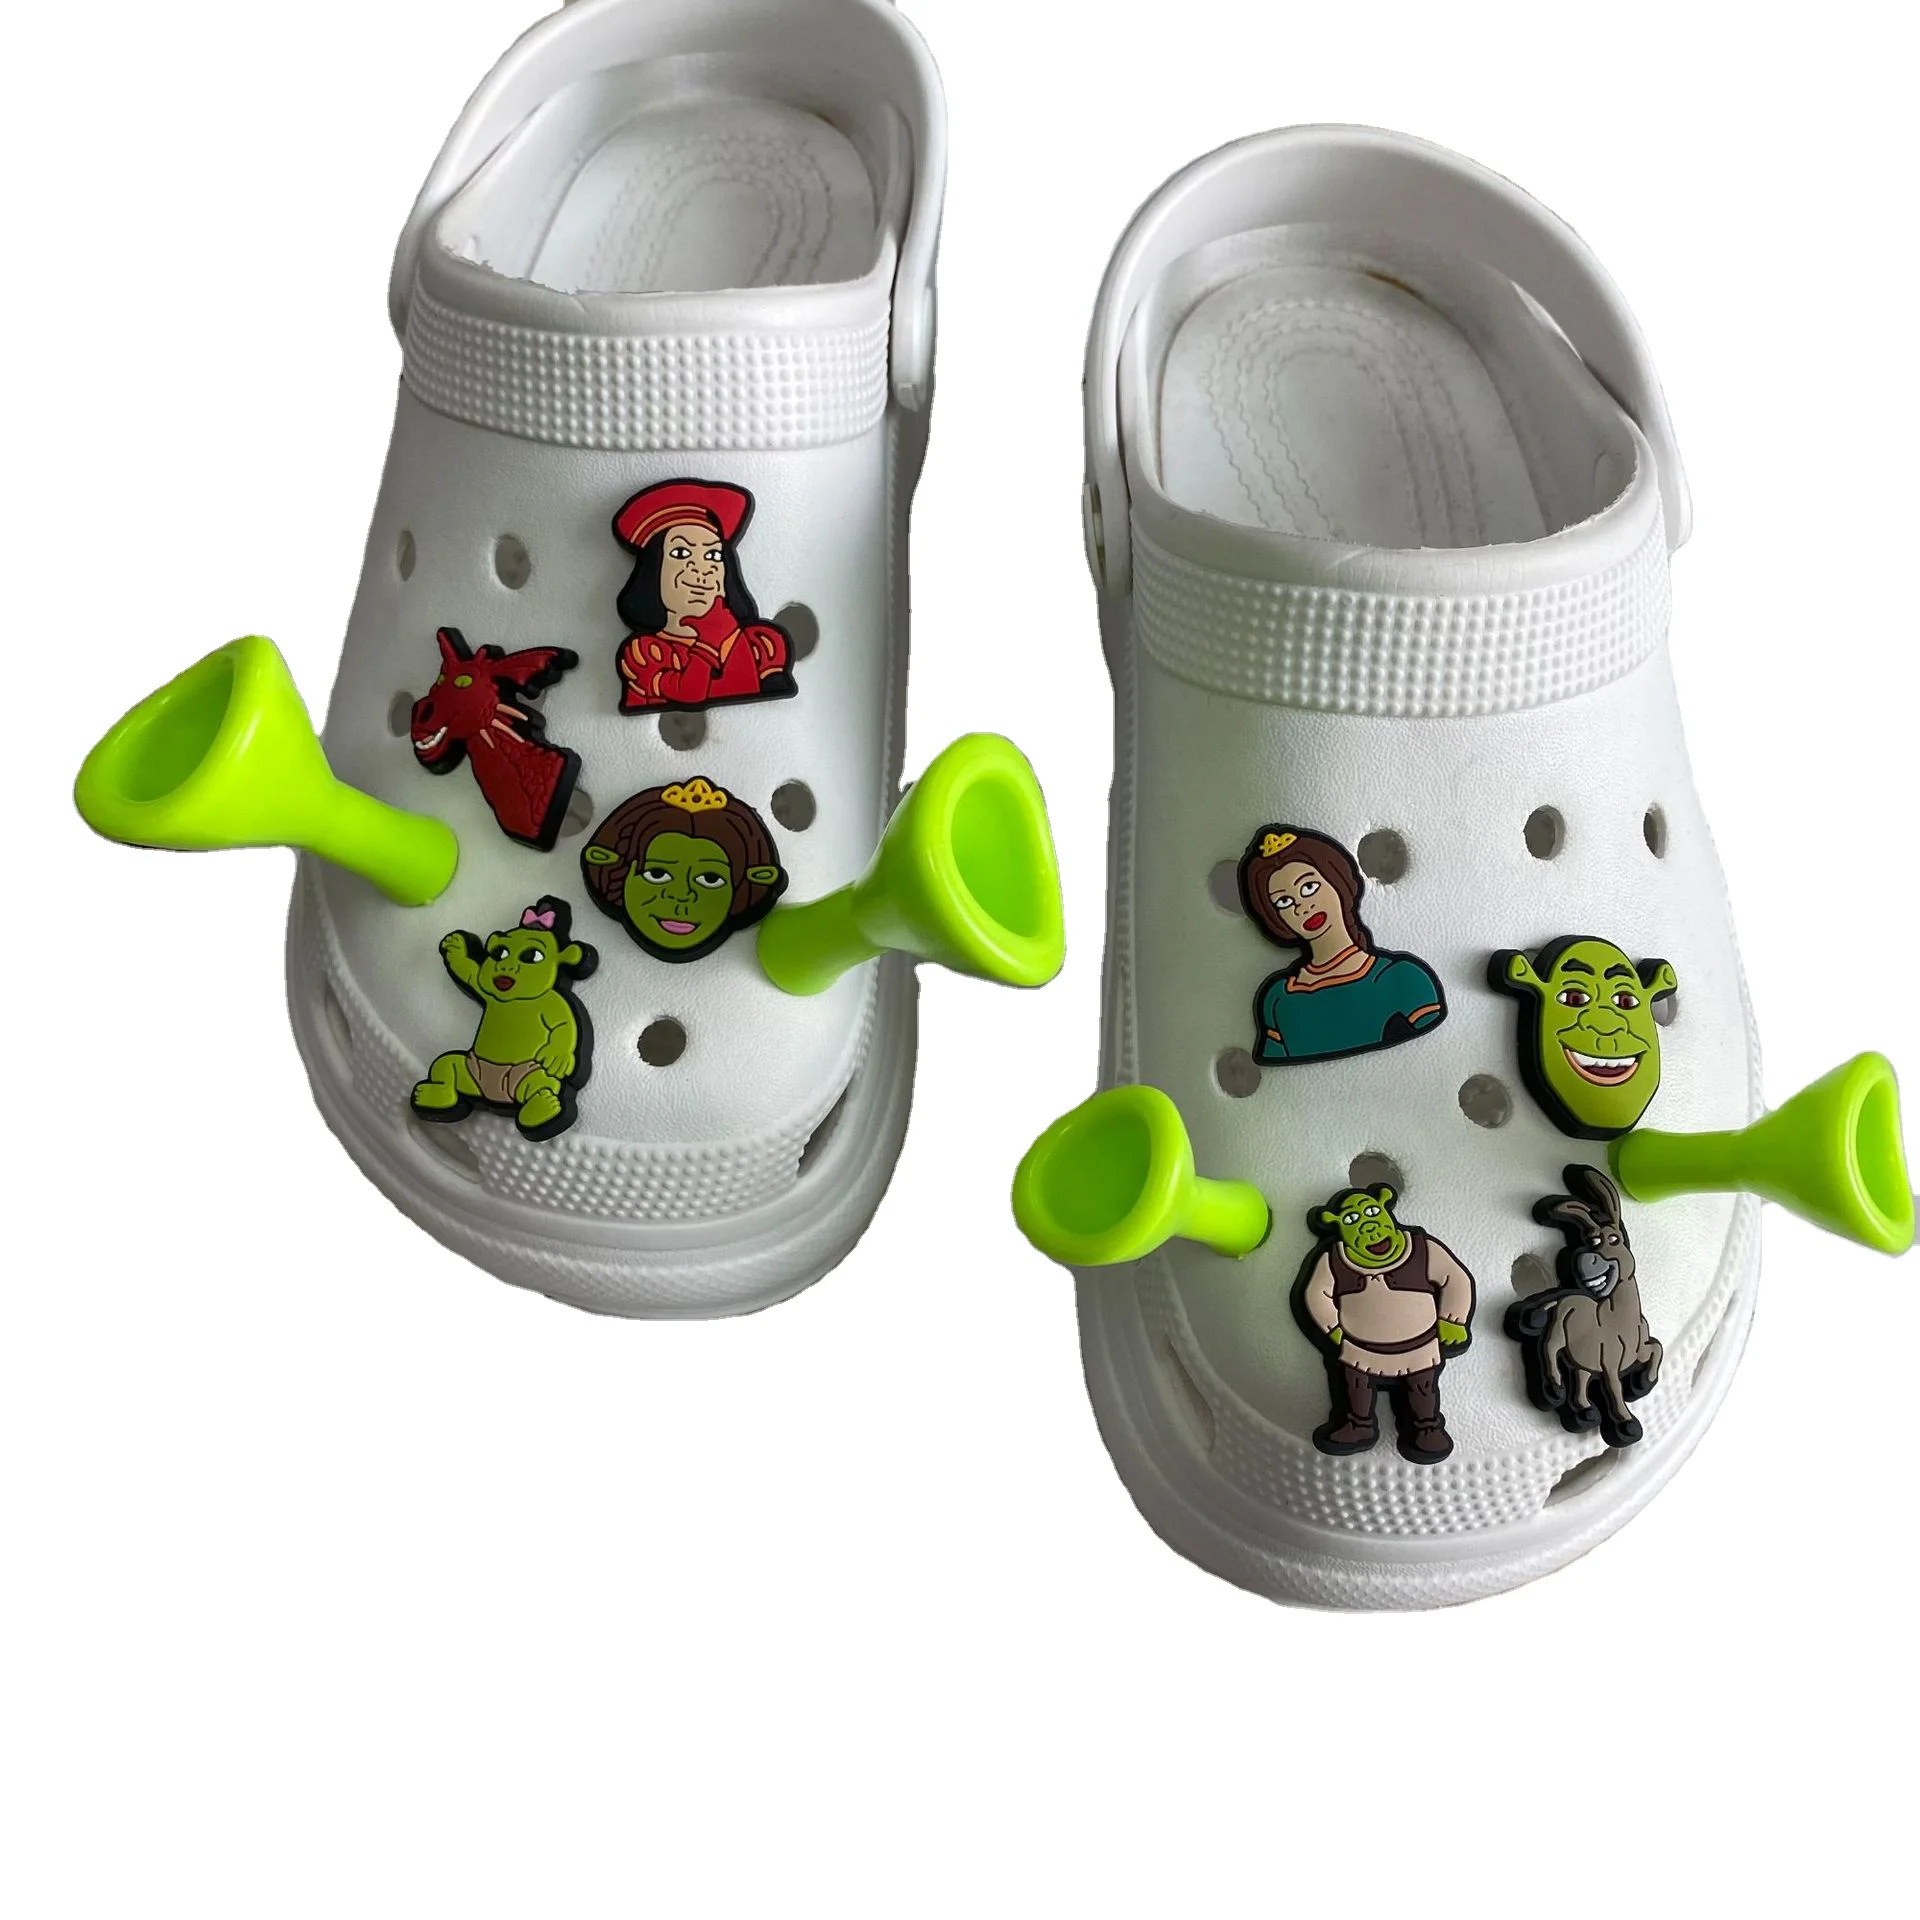 10PCS High Imitation PVC Shoe Charms Cartoon Shrek Croc Clogs Sandals  Garden Shoe Accessories Funny Jibz for Kids Boy Party Gift - AliExpress